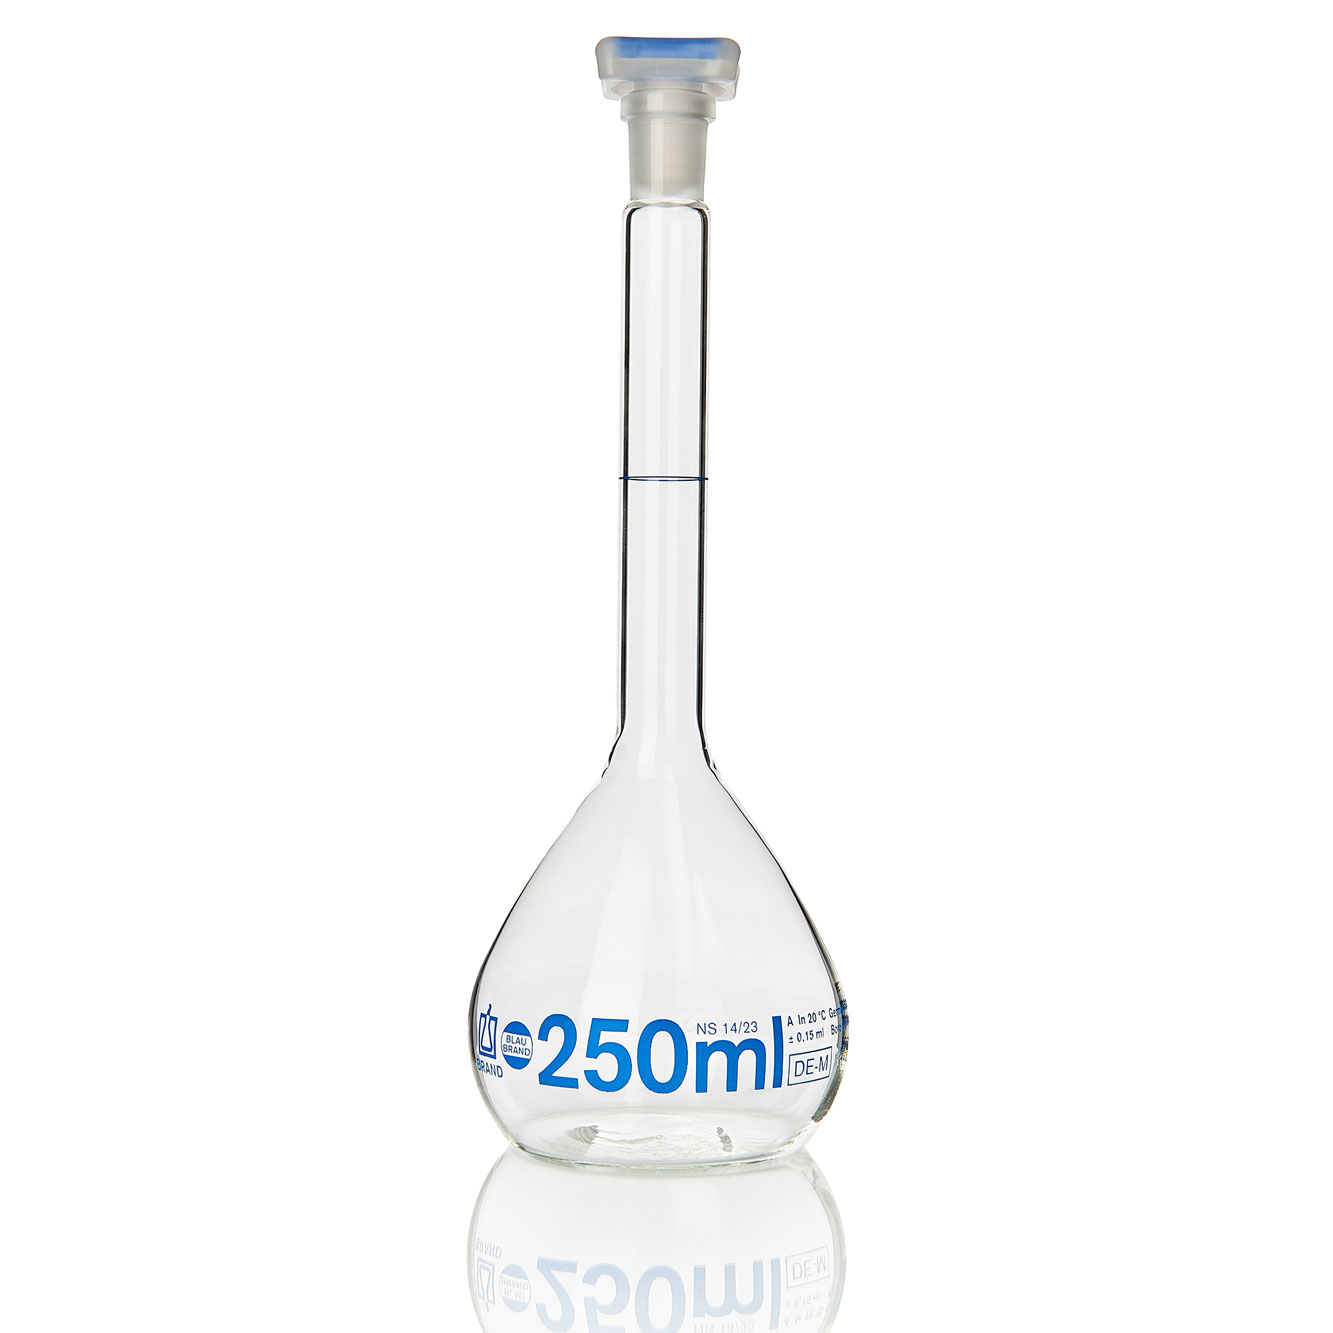 Flask Stopper Size Chart